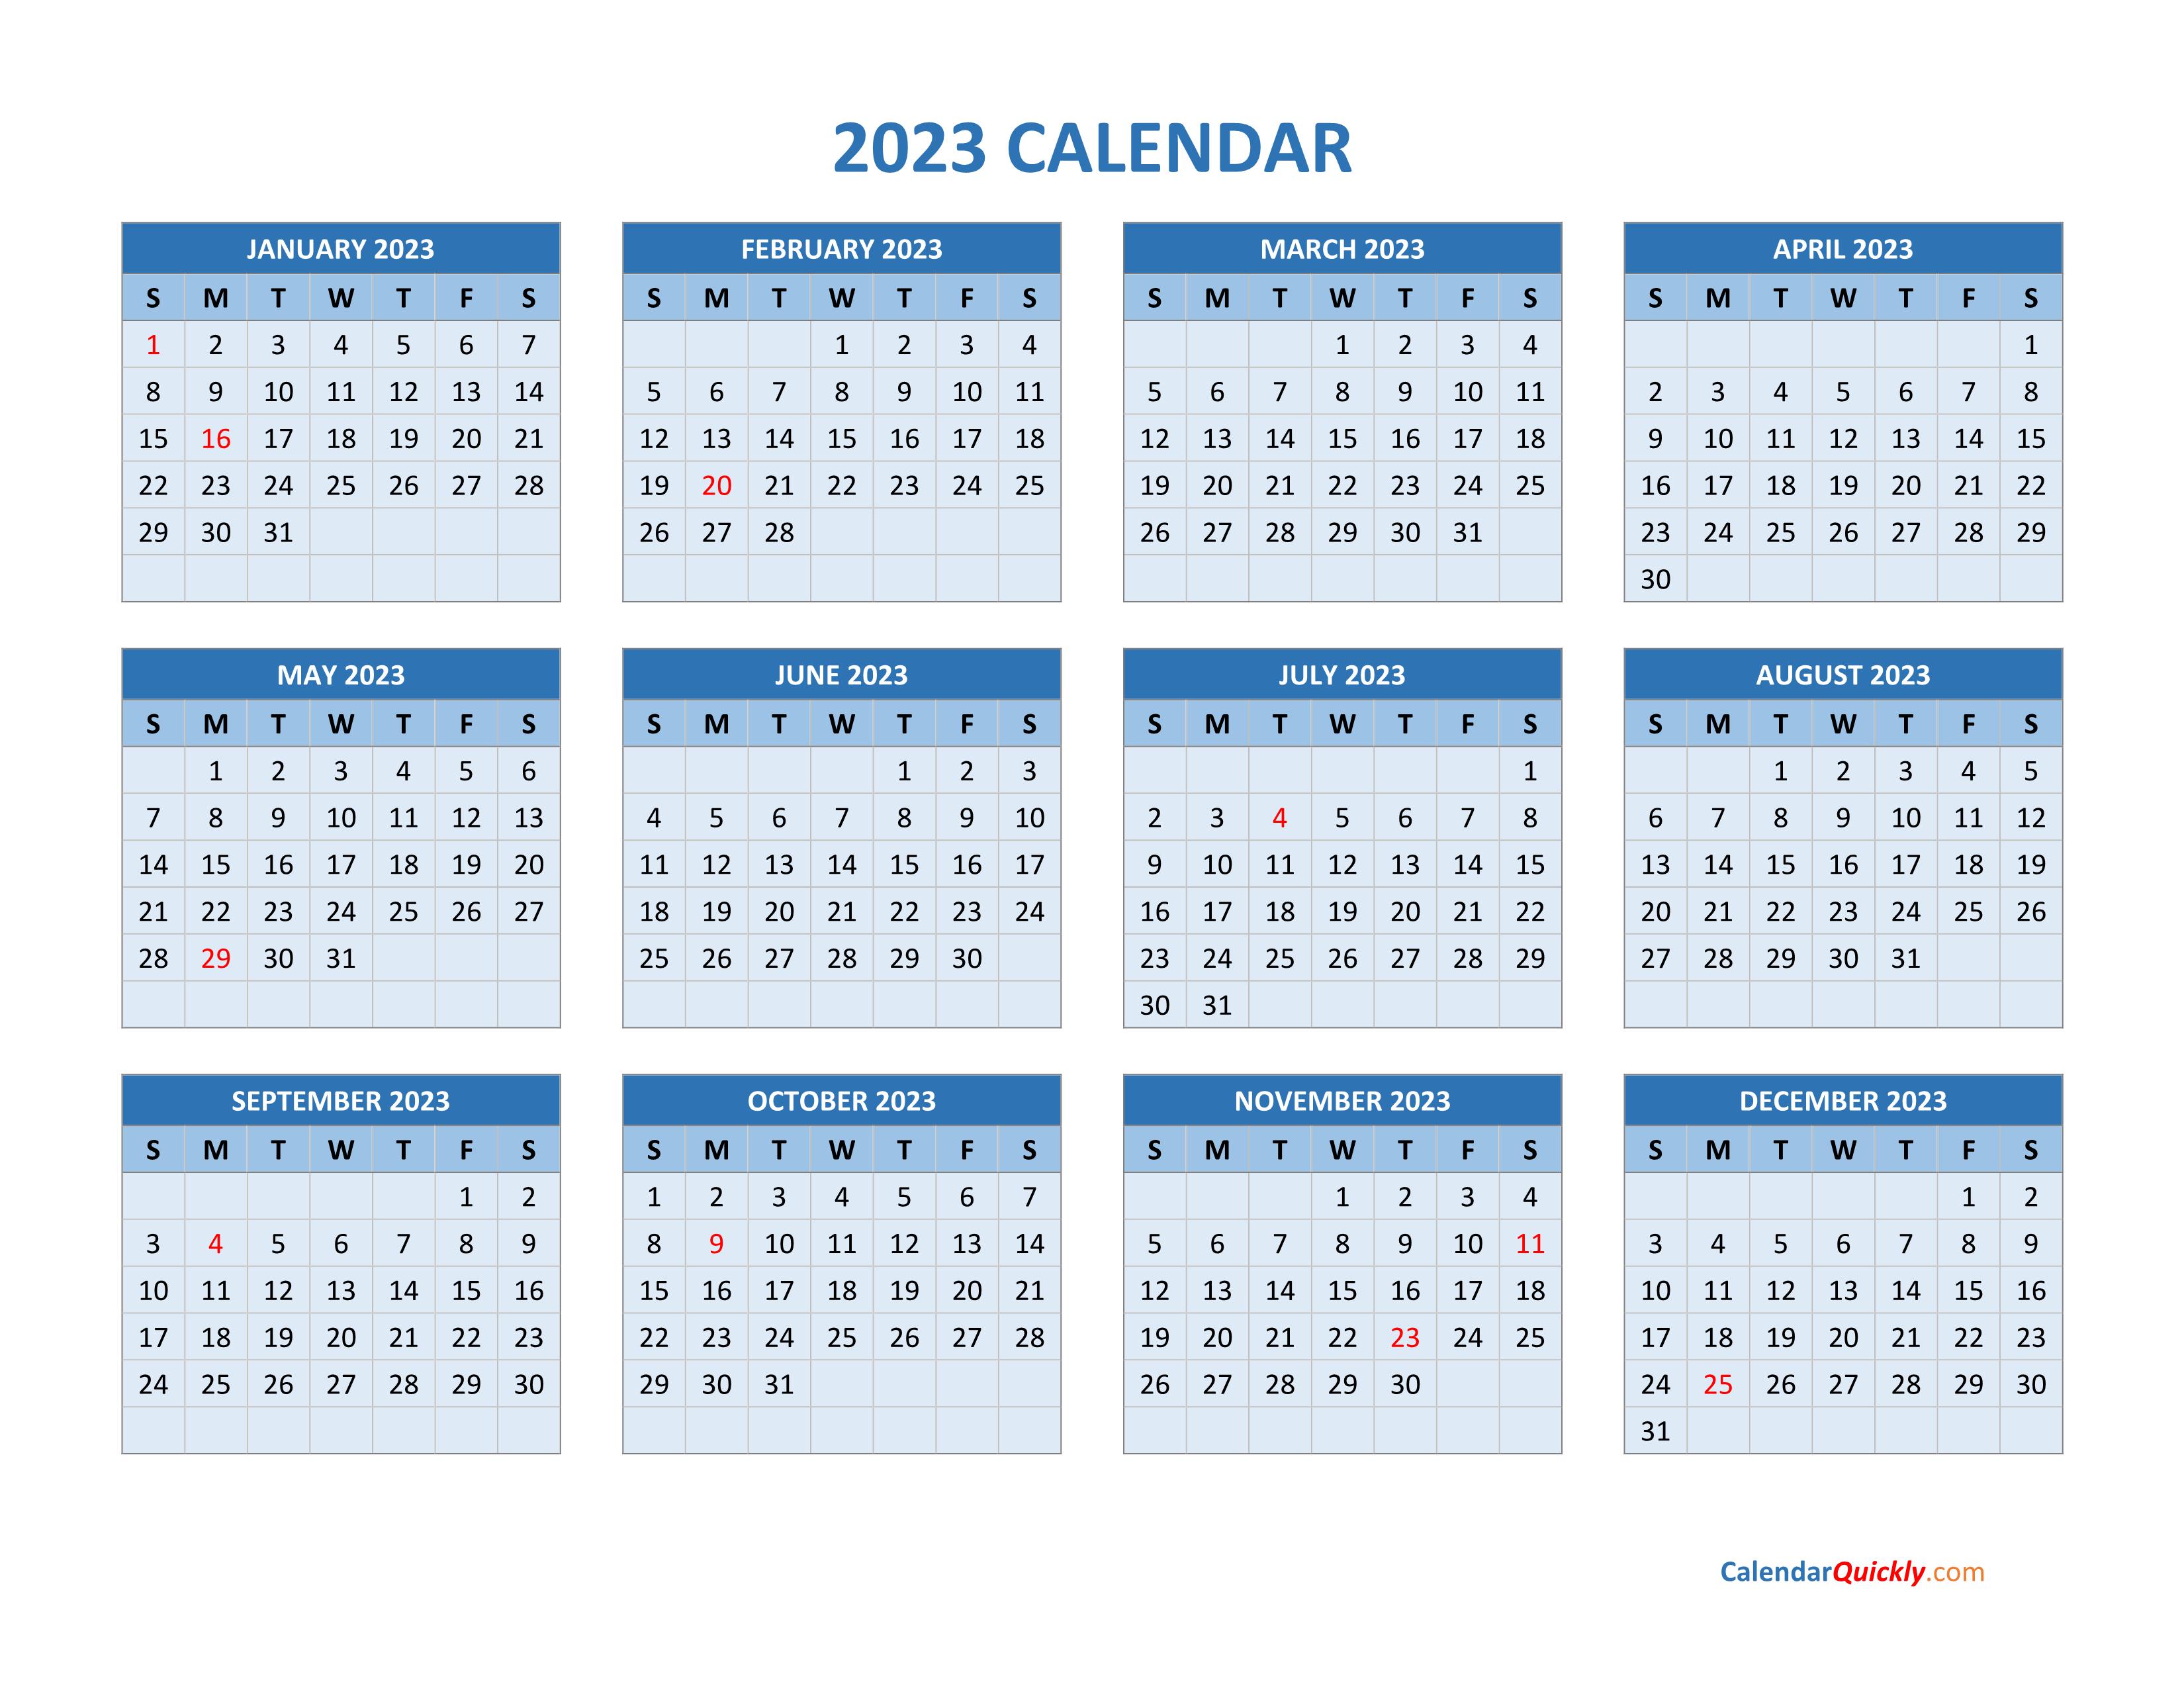 2023 Calendar | Calendar Quickly